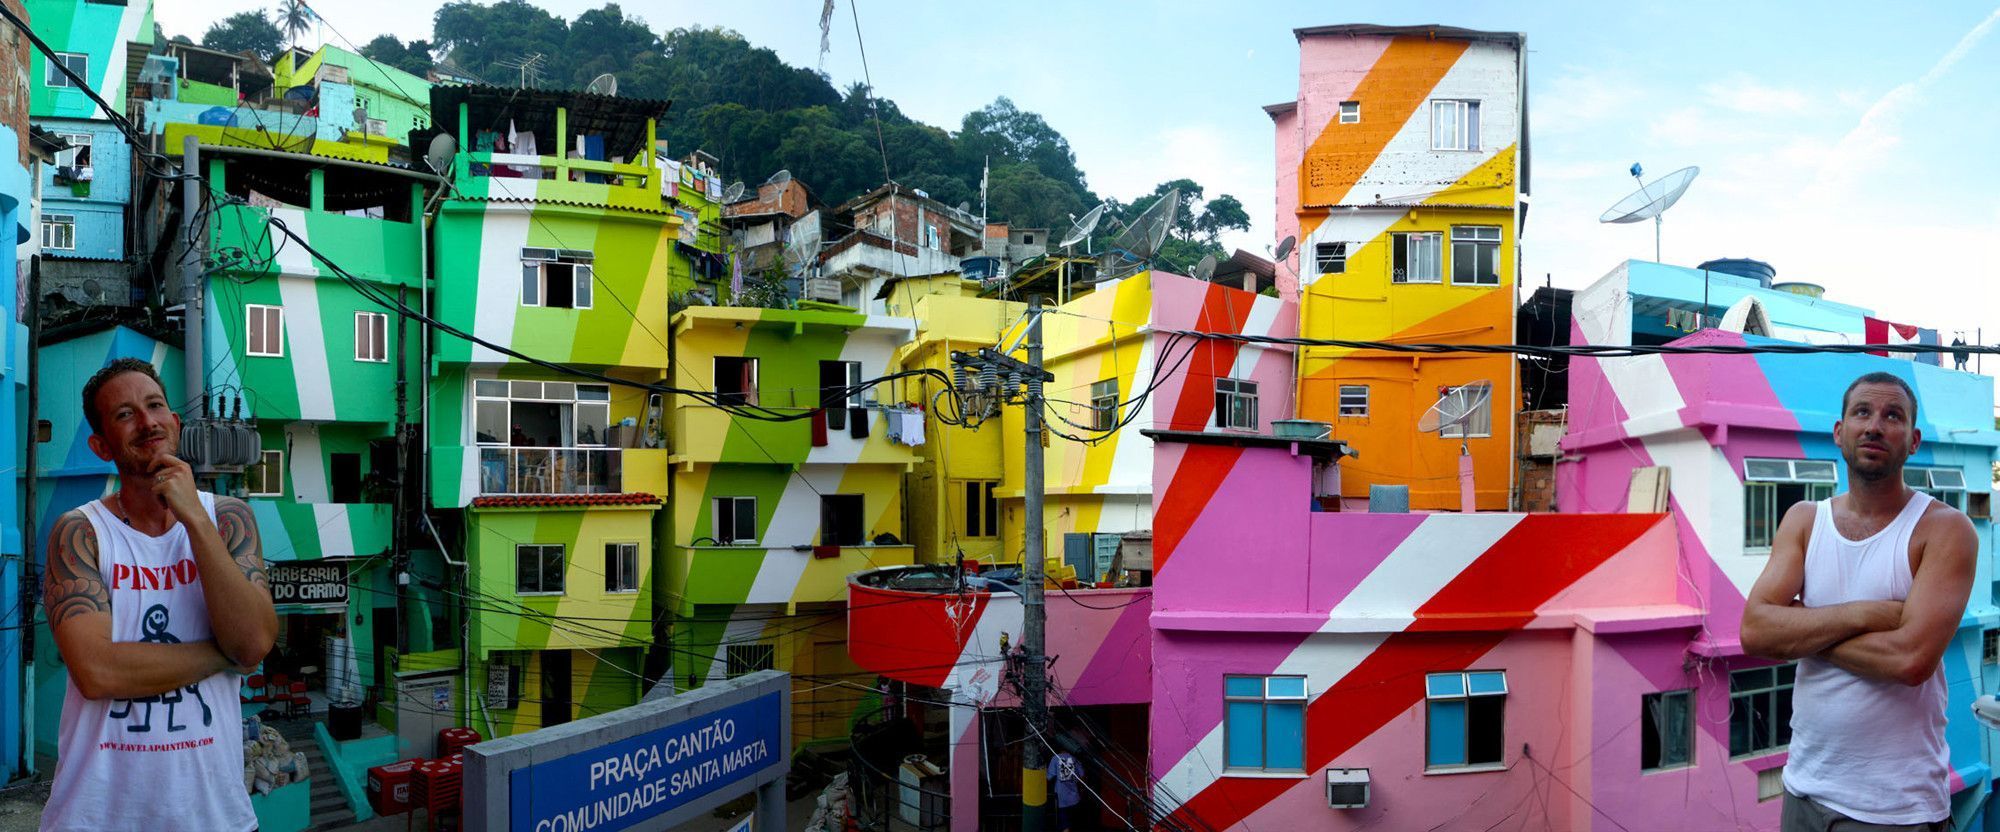 Favela Wallpaper